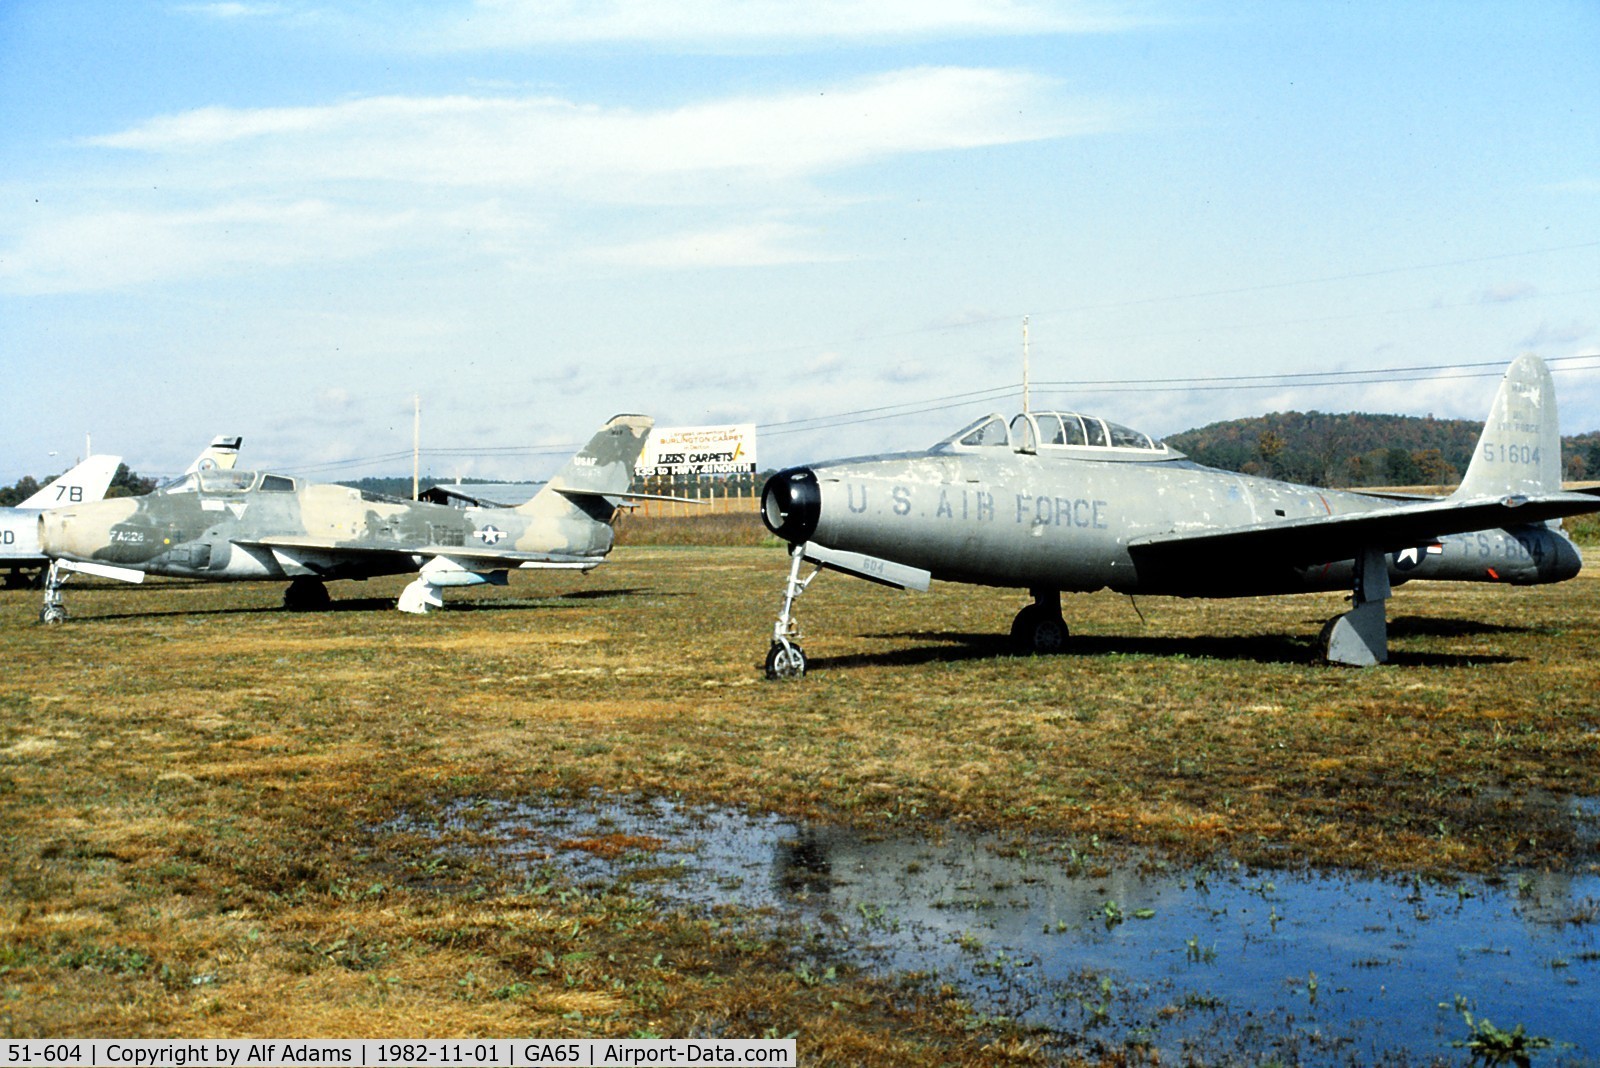 51-604, 1951 Republic F-84E Thunderjet C/N Not found 51-604, Shown displayed at Mercer Field, Calhoun, Georgia in 1982.